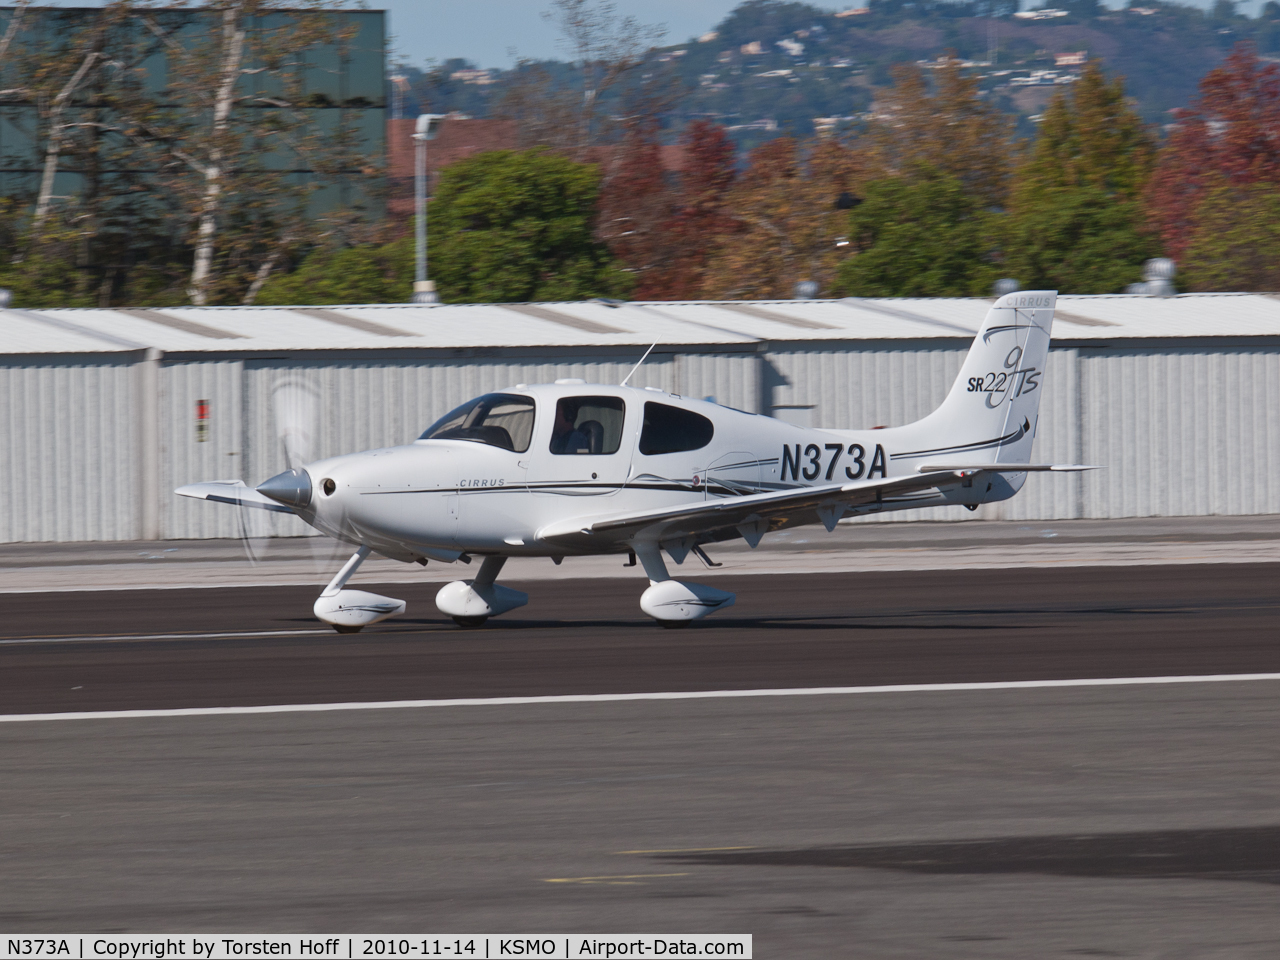 N373A, 2006 Cirrus SR22 GTS C/N 2196, N373A departing from RWY 21